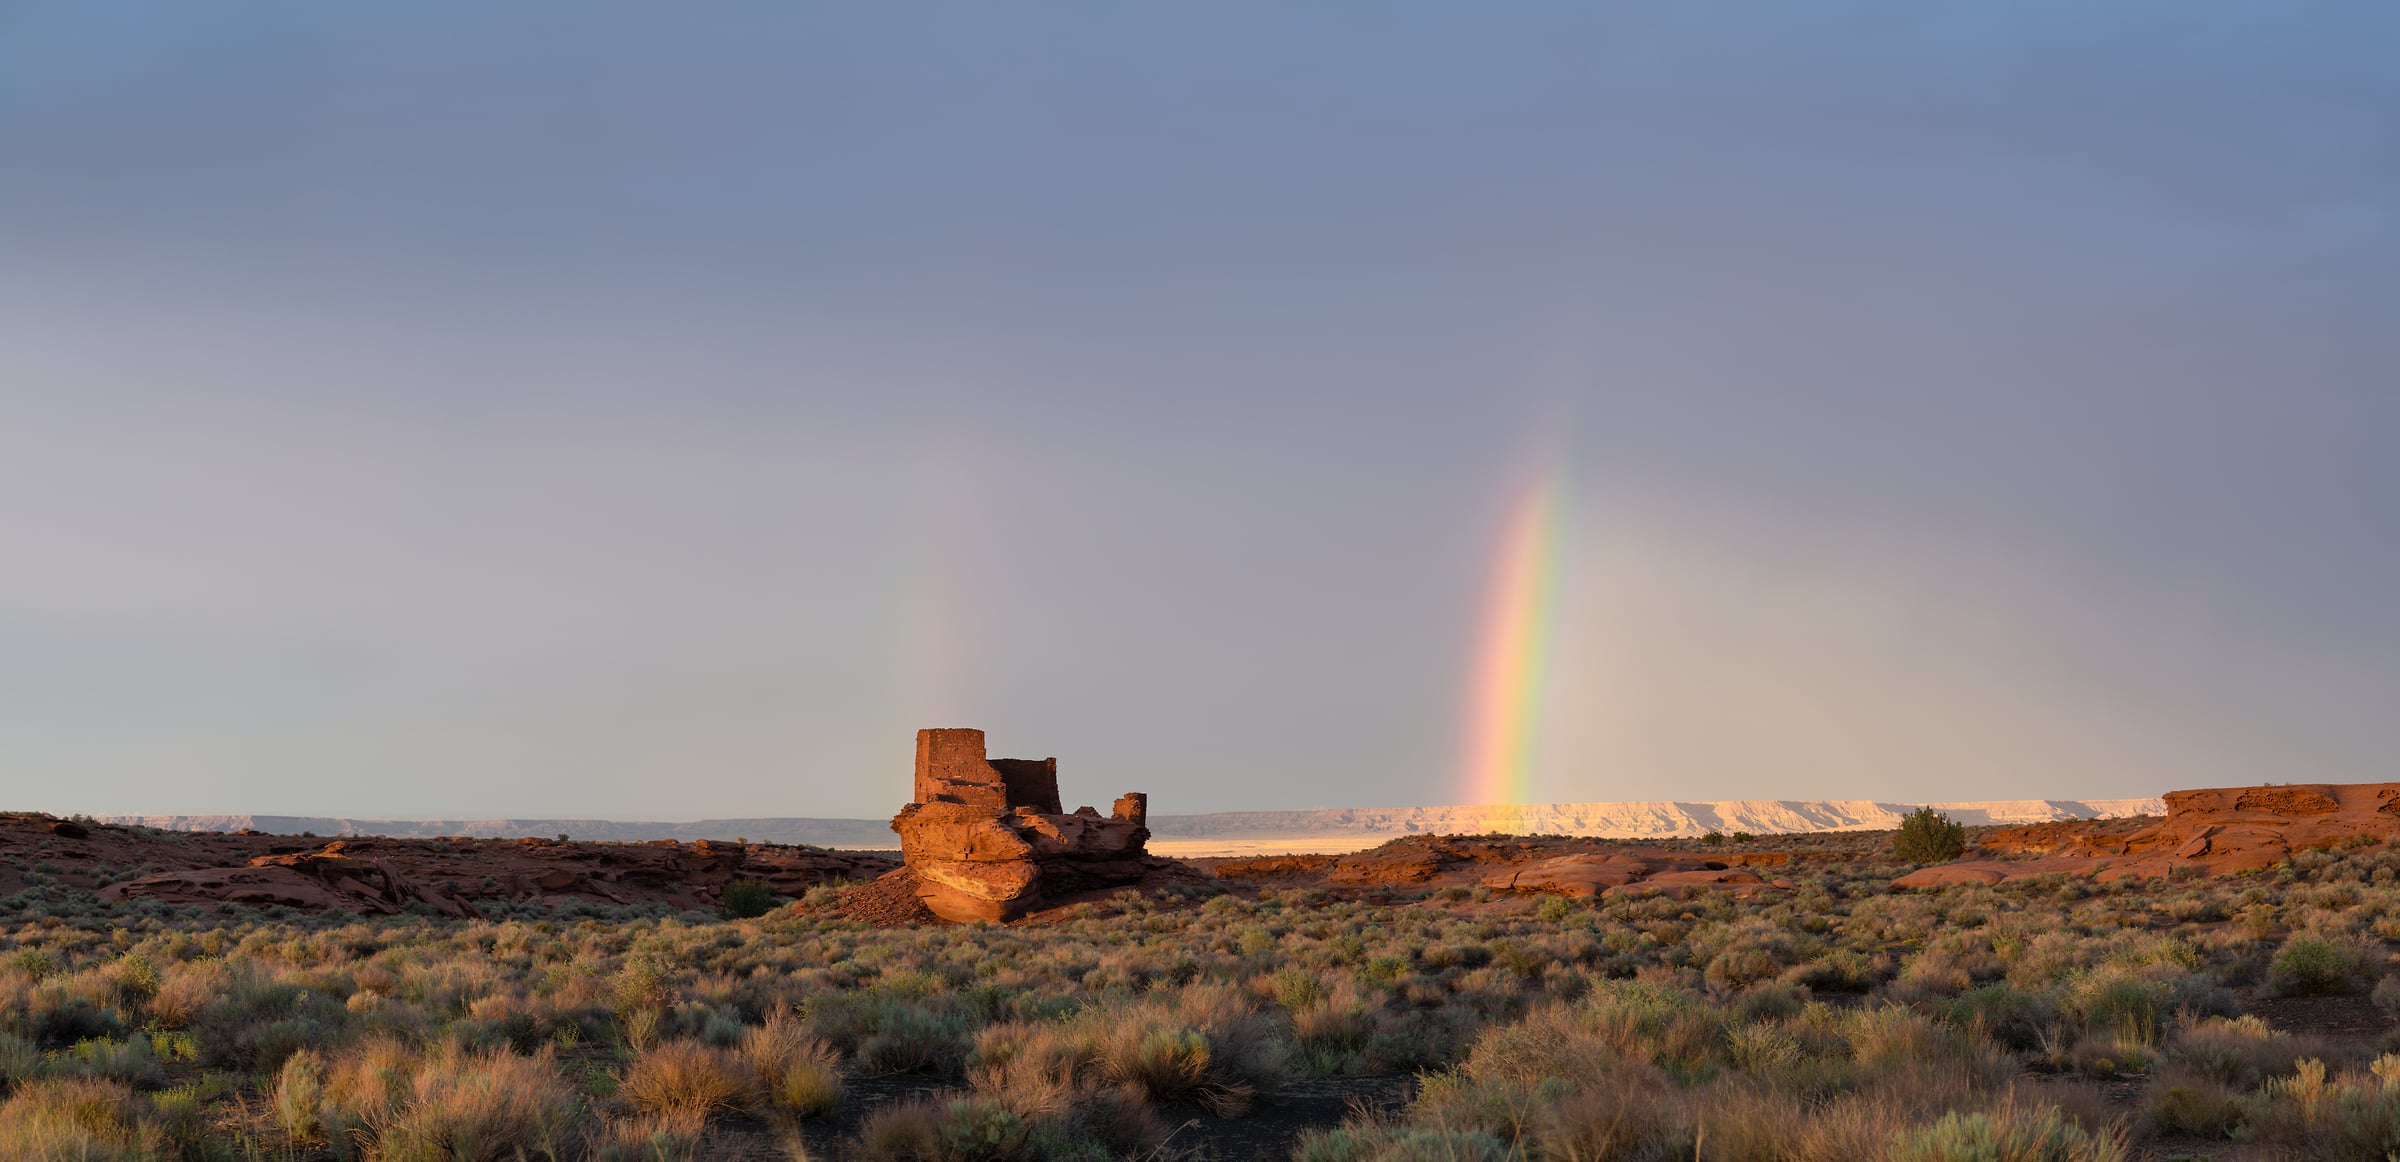 263 megapixels! A very high resolution, large-format VAST photo print of Wukoki Pueblo in Wupatki National Monument with a rainbow; landscape photograph created by Greg Probst in Wupatki National Monument, Arizona.